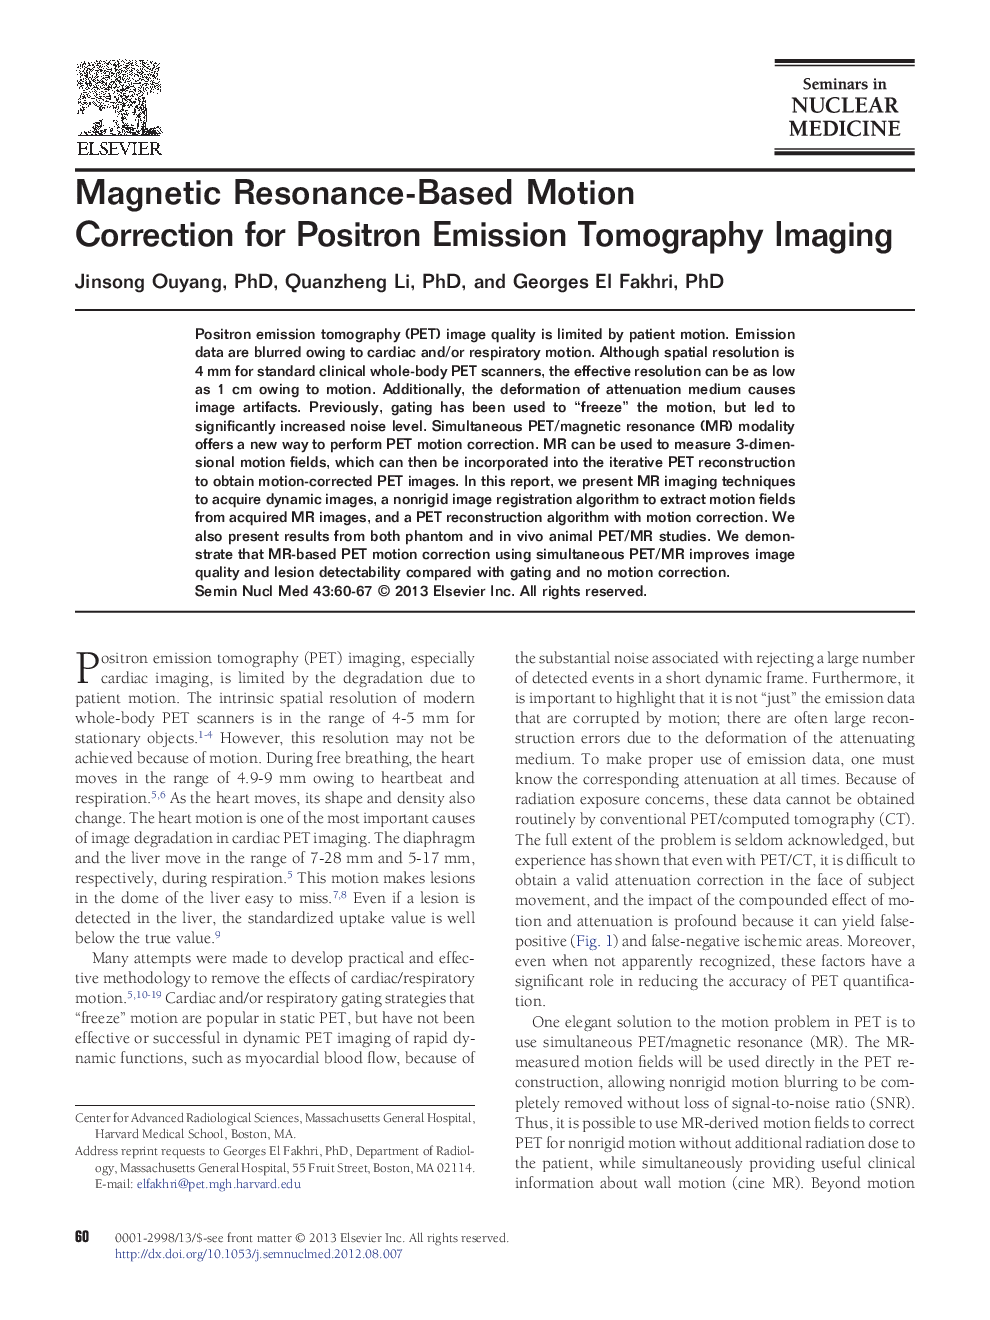 Magnetic Resonance-Based Motion Correction for Positron Emission Tomography Imaging